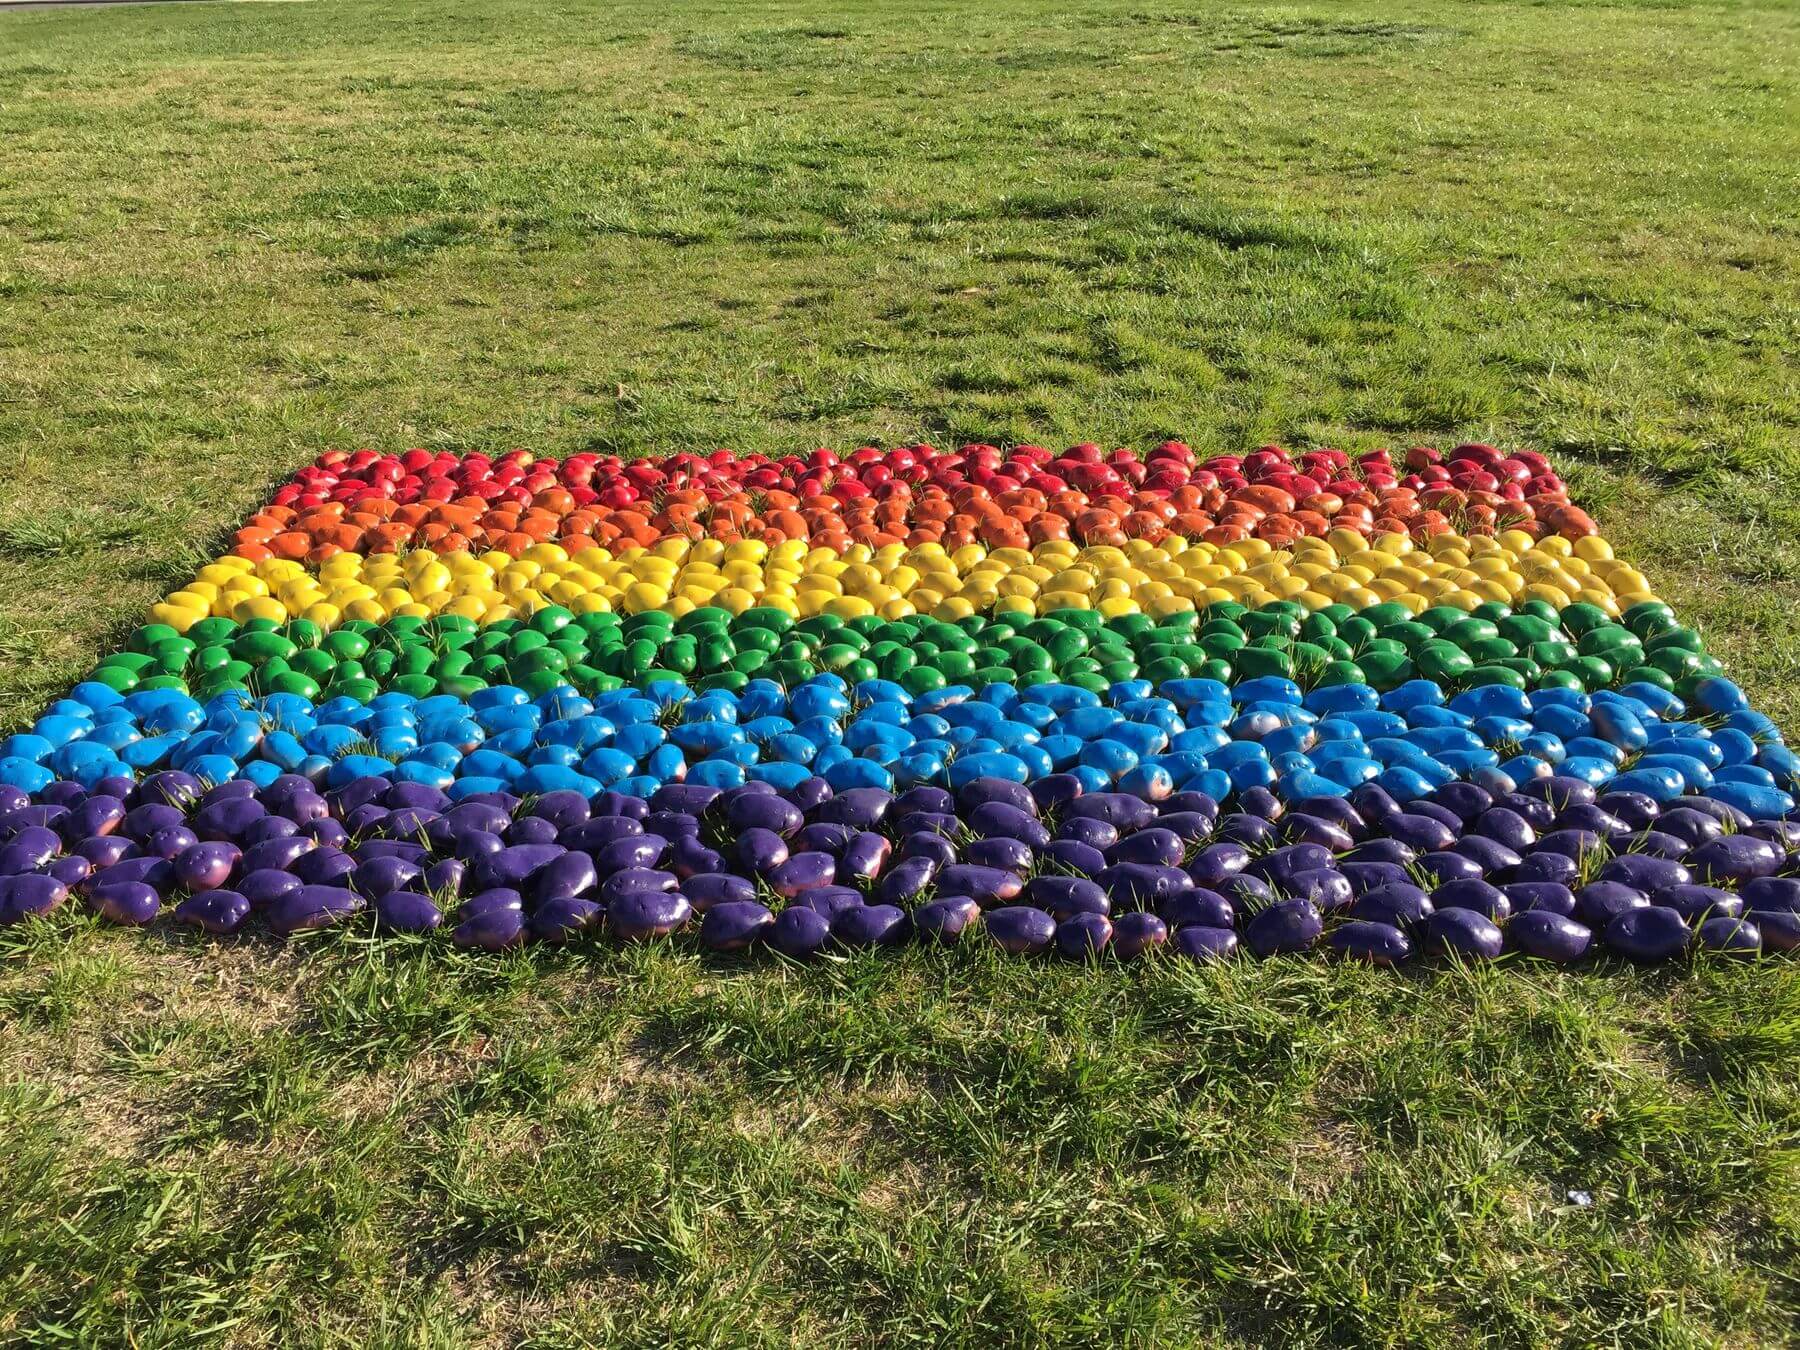 In Australia patate rainbow per i matrimoni gay